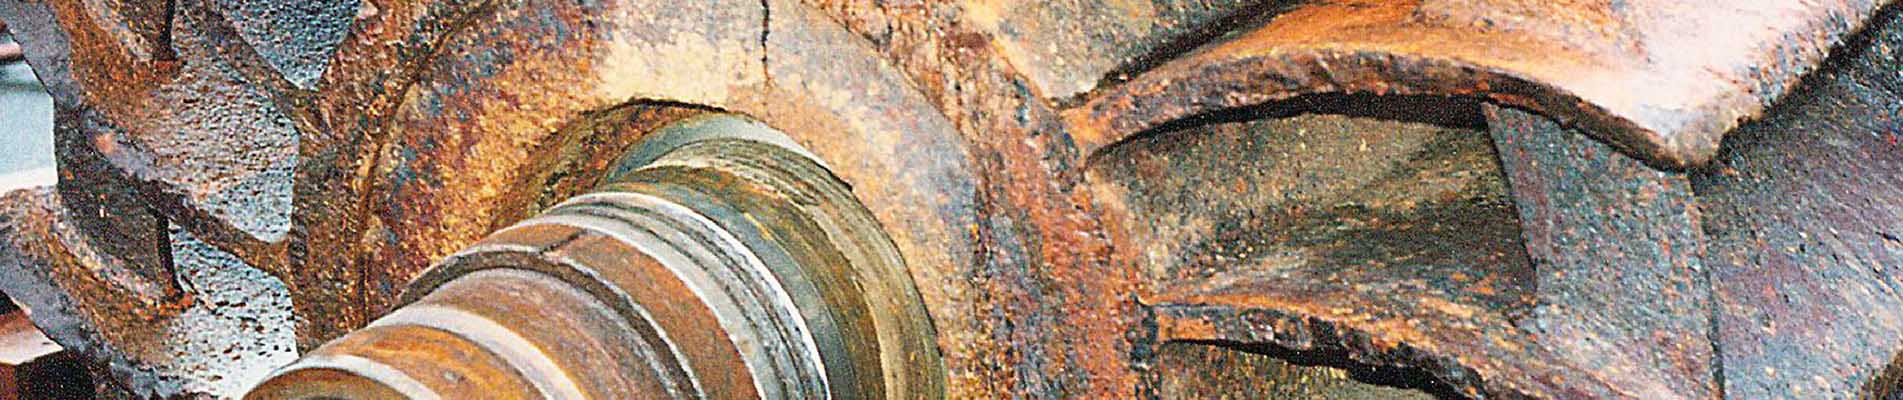 Corrosion problems on vacuum pumps